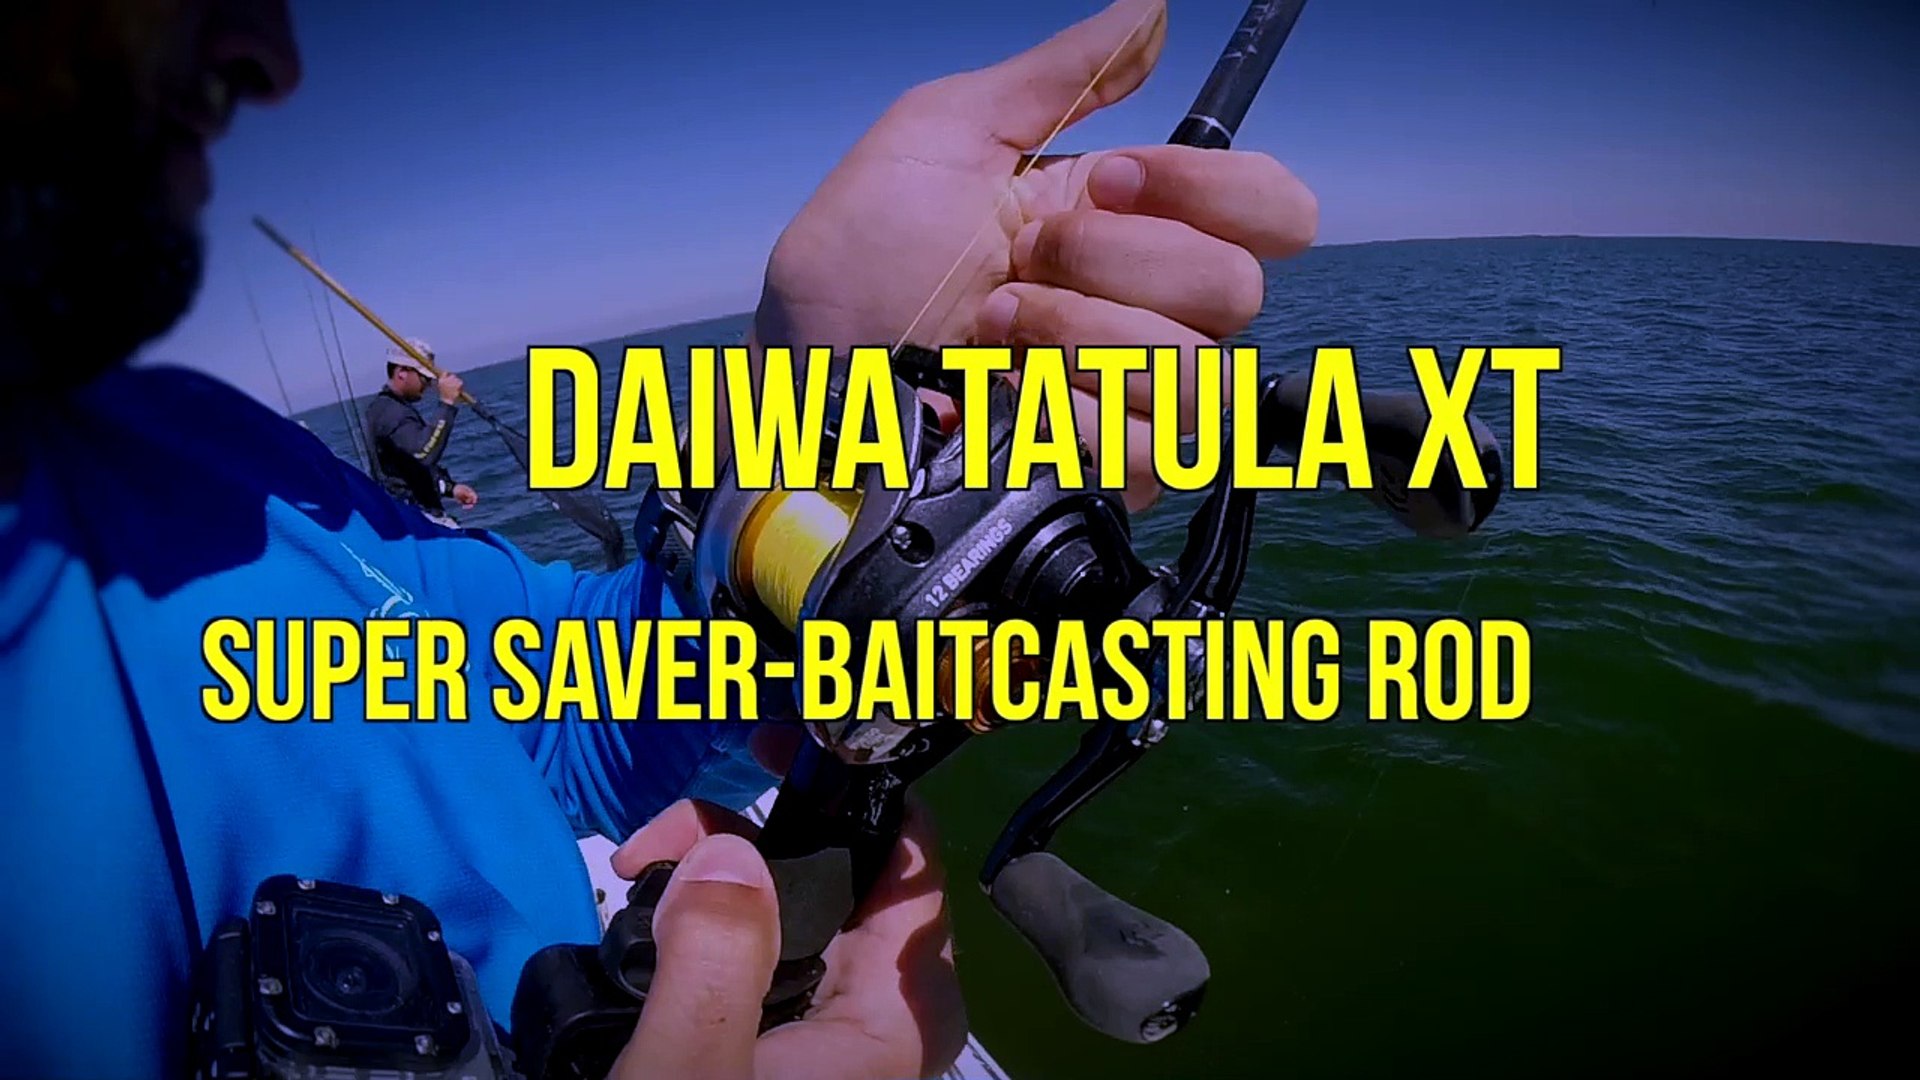 Daiwa Tatula XT Baitcasting Rod - video Dailymotion